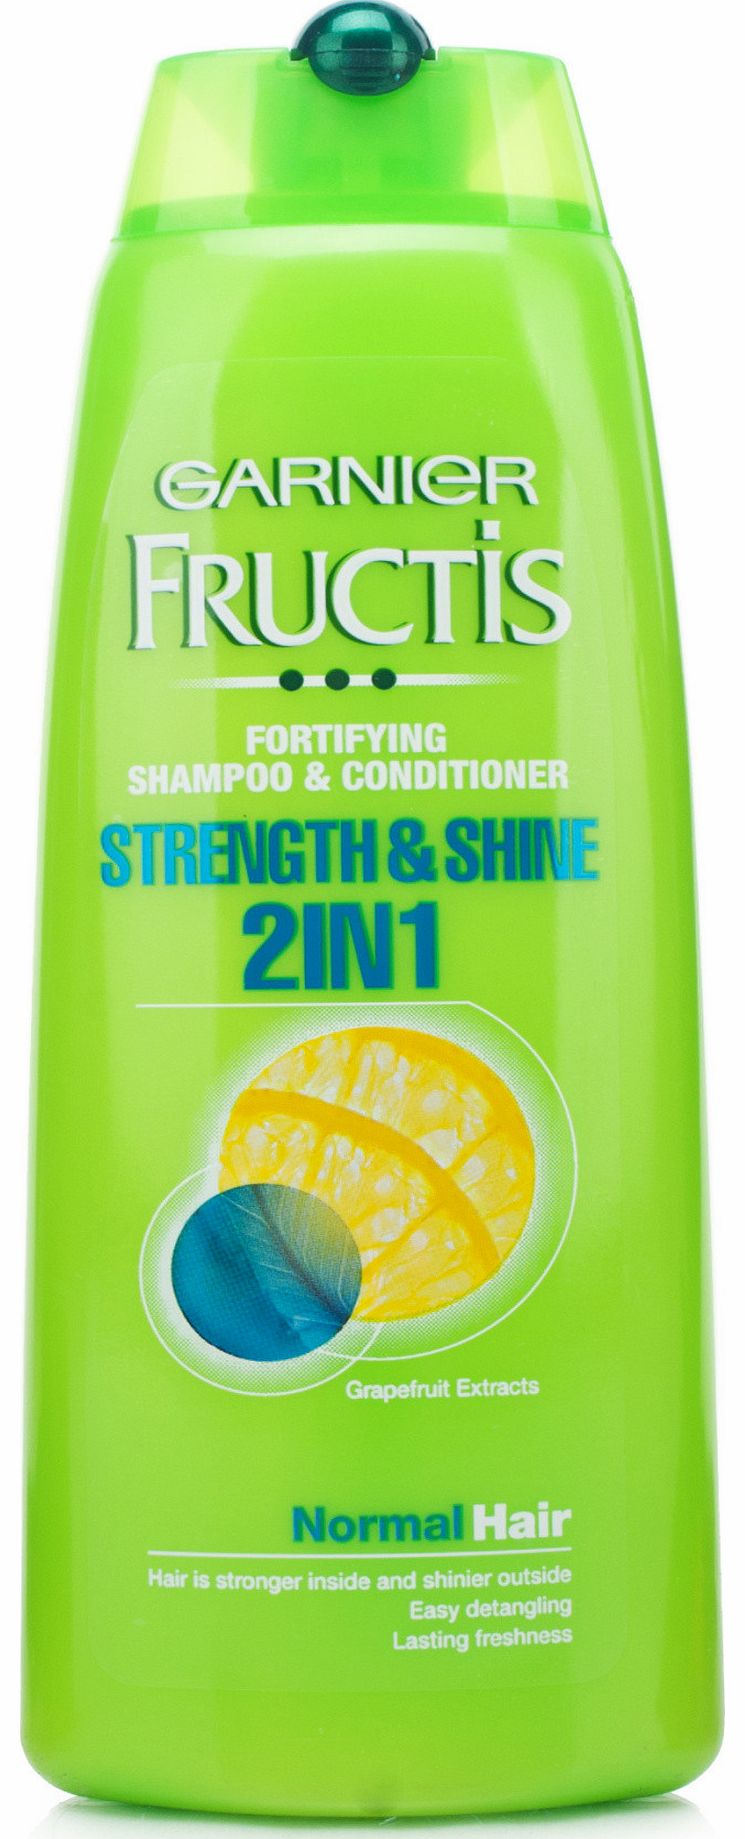 Garnier Fructis Strength & Shine 2-in-1 Shampoo